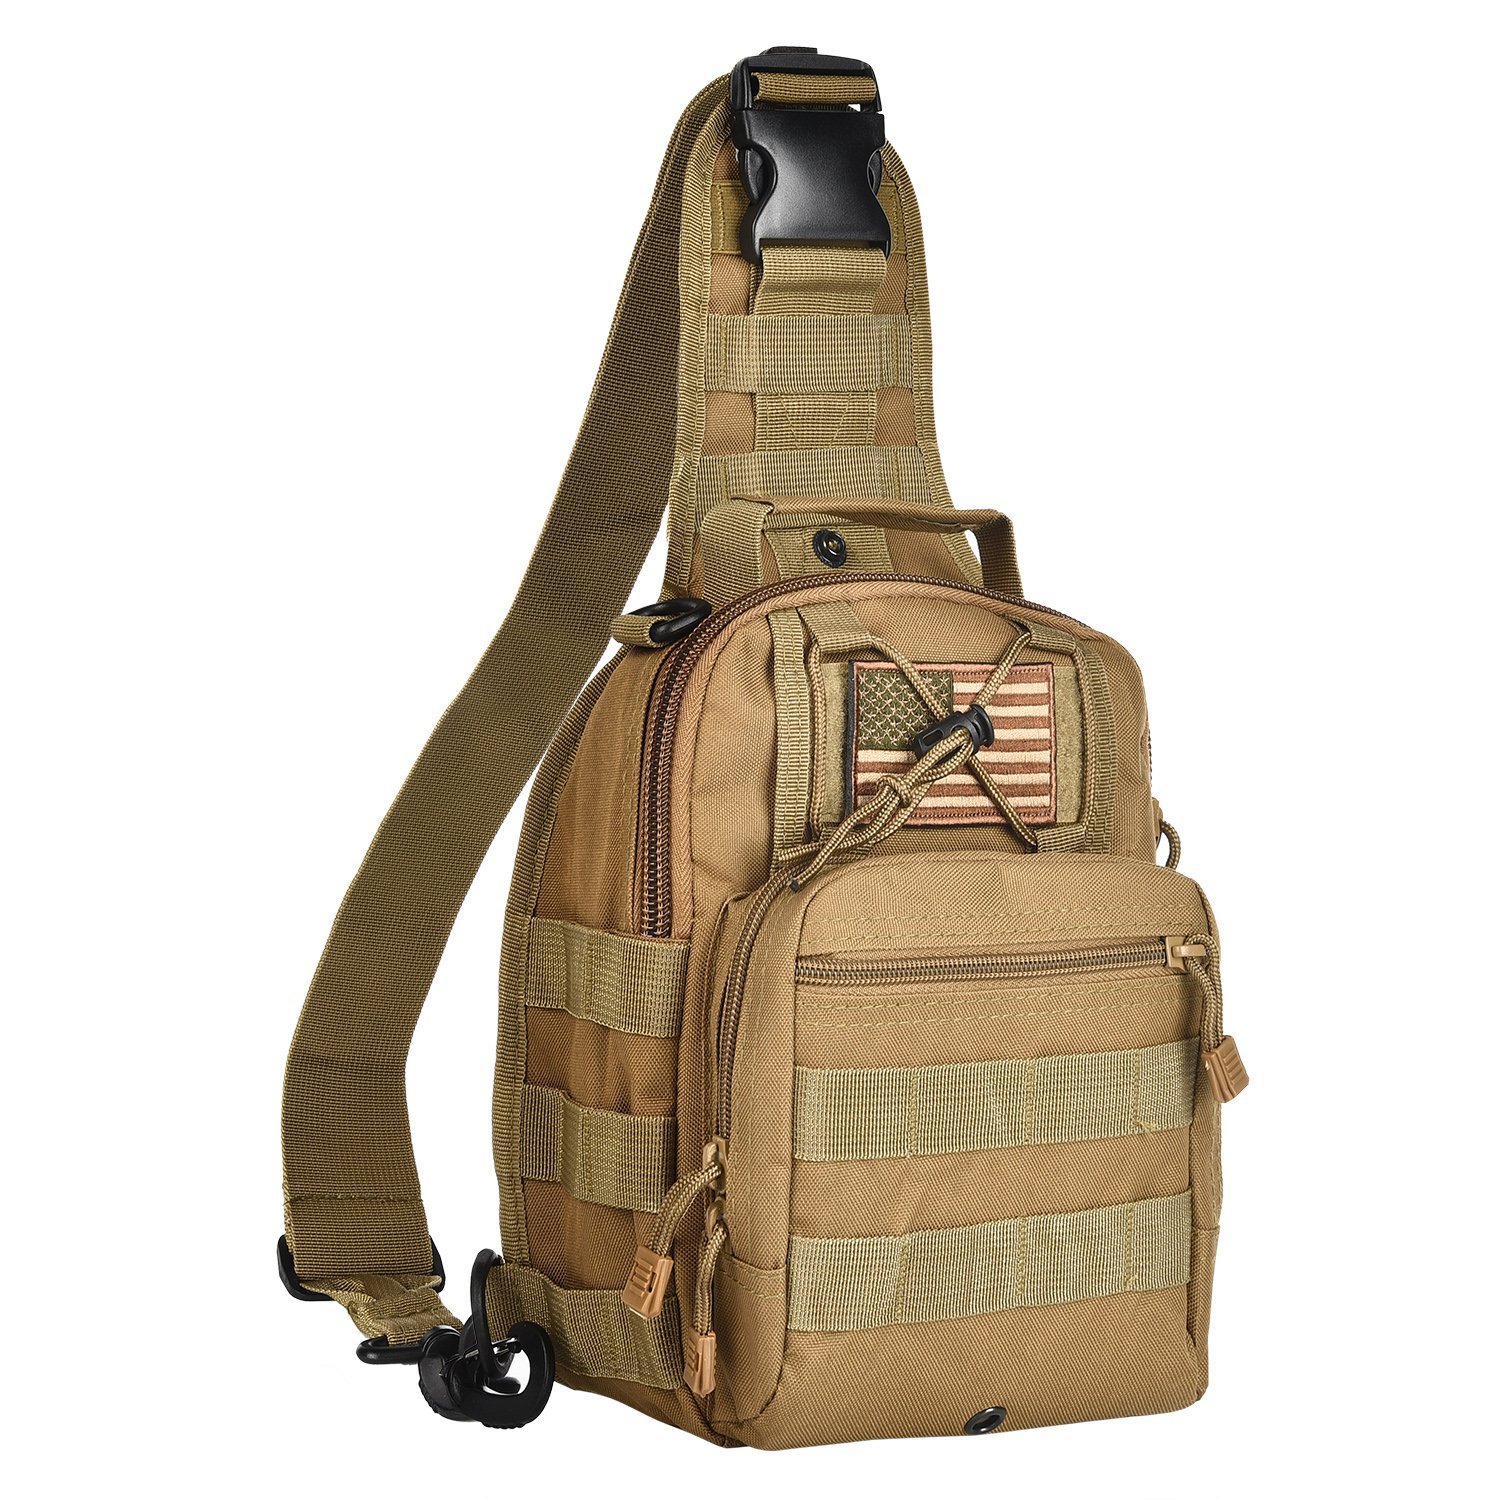 CVLIFE Tactical Sling Bag Pack - $16.79 w/code 